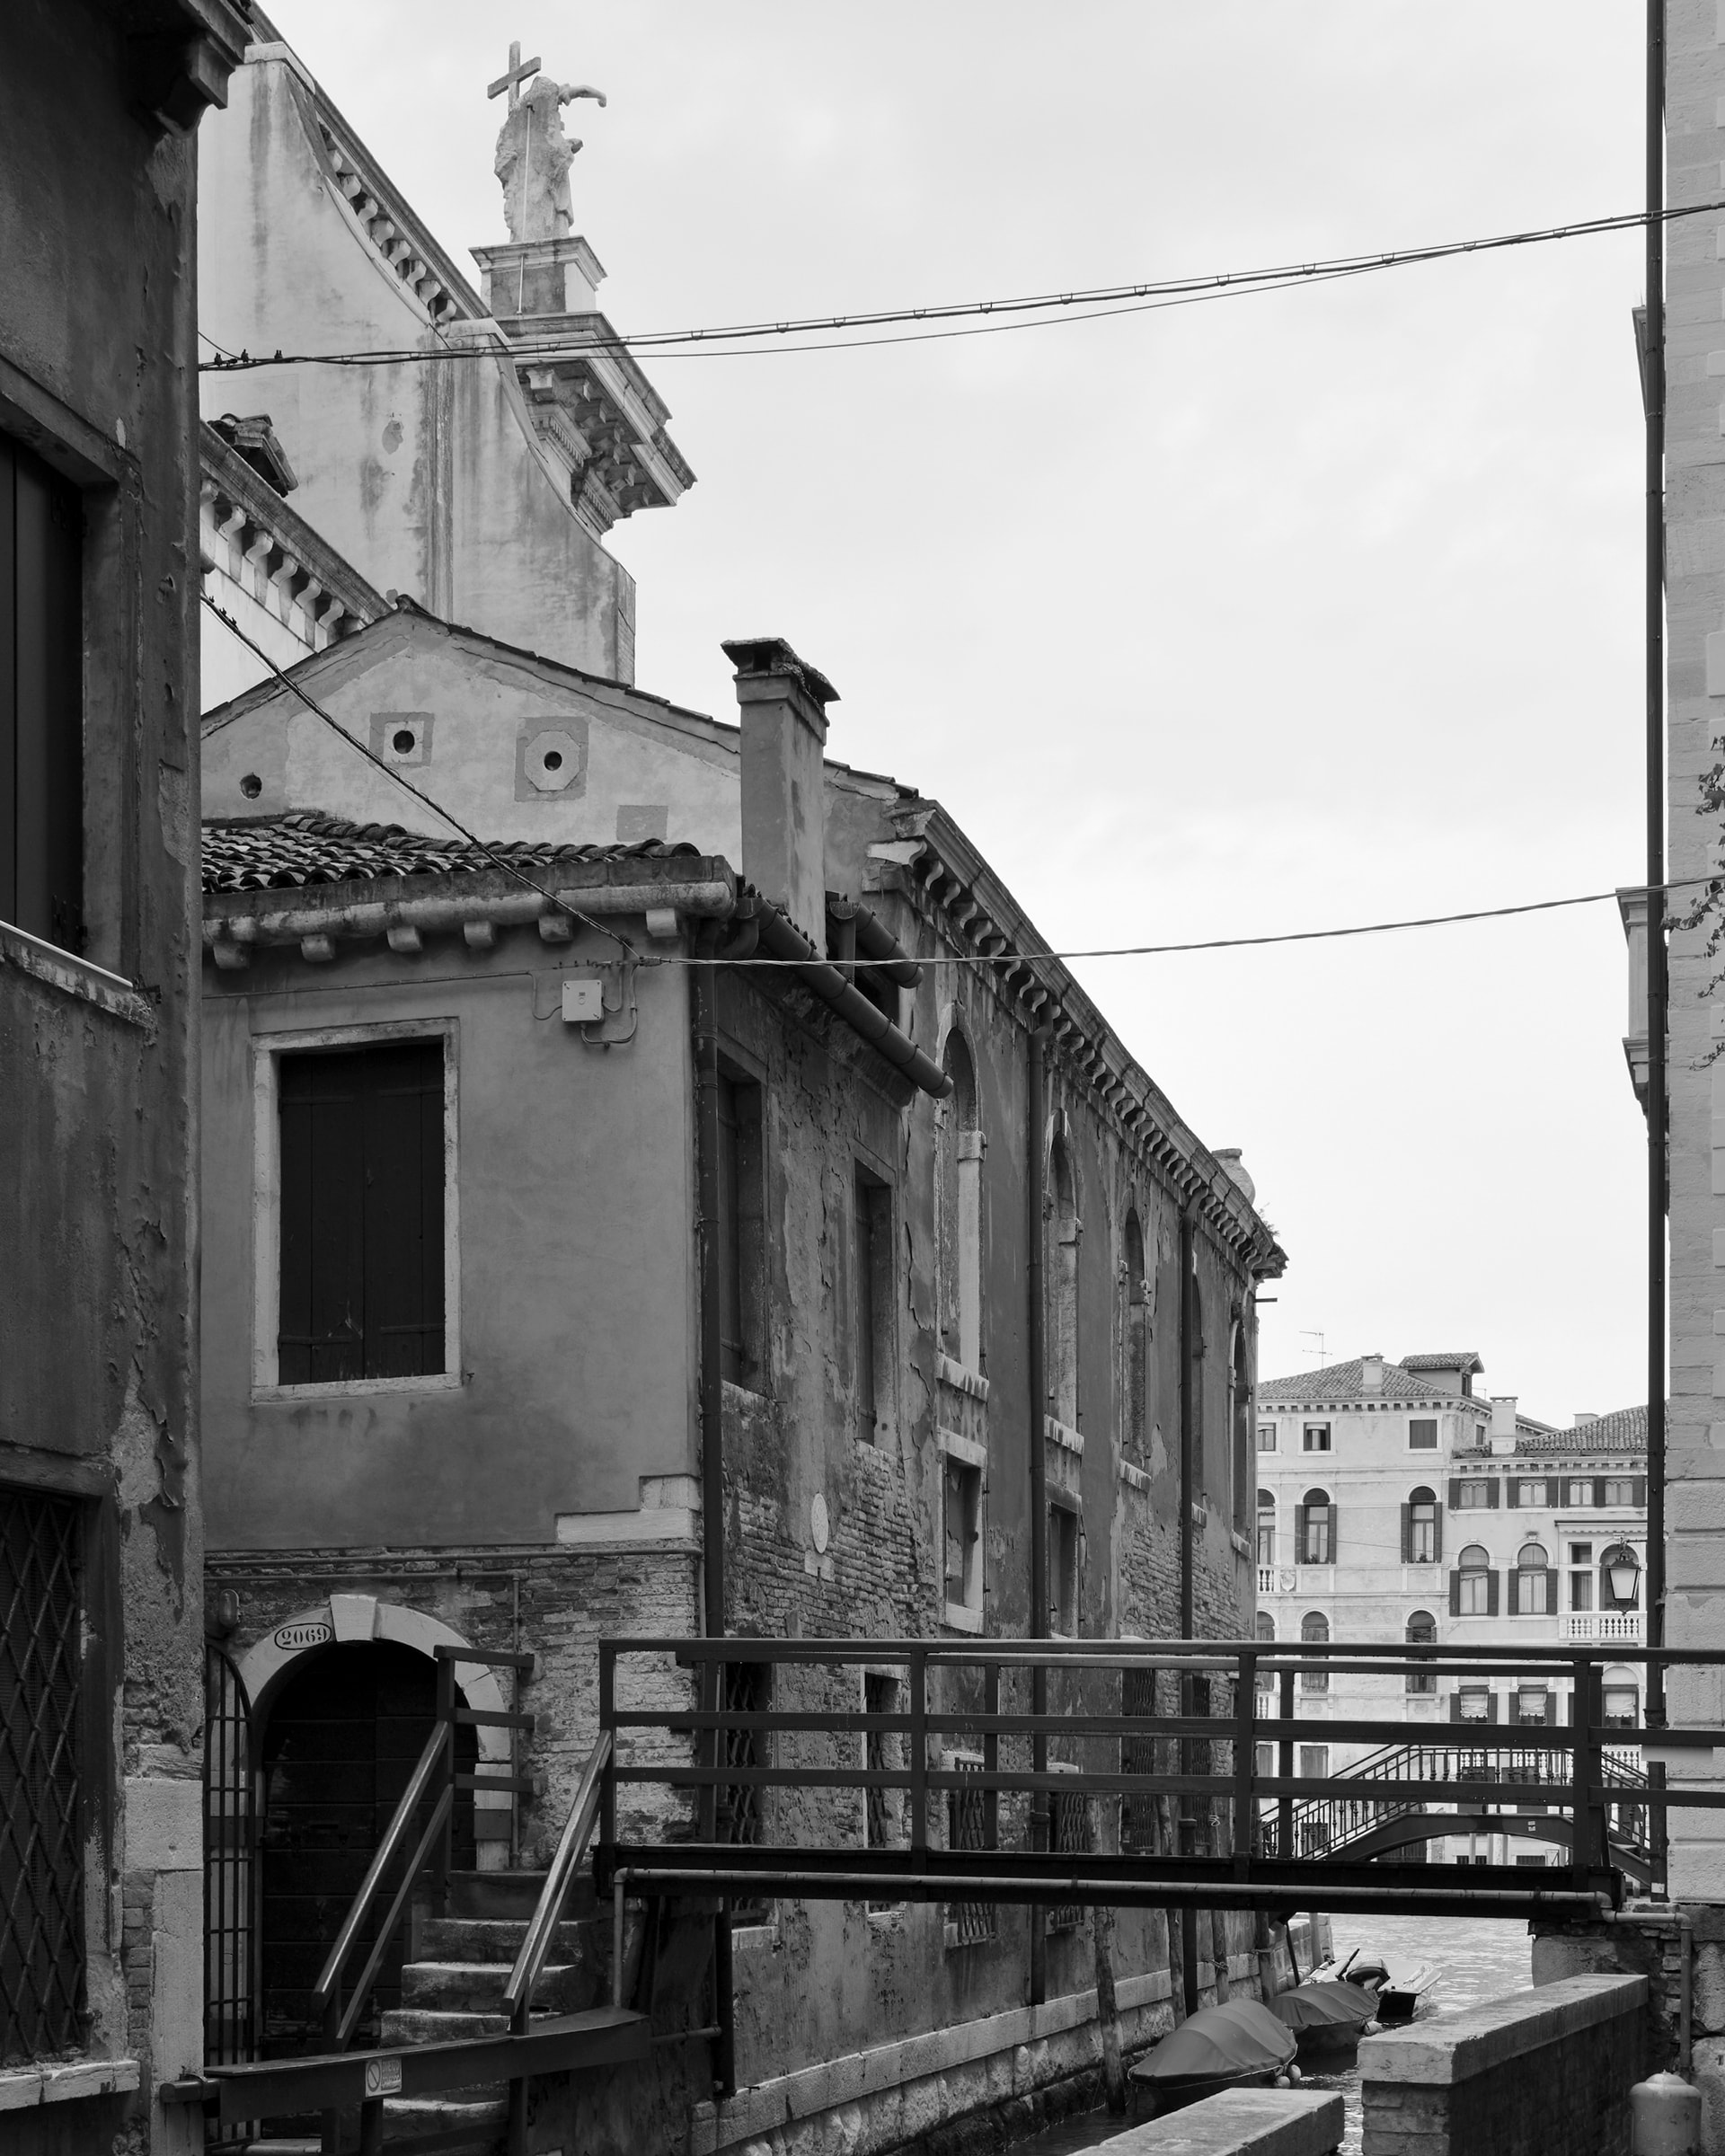 Santa Croce, Rio de San Stae, 2019. Venice Urban Photo Project / Mario Peliti